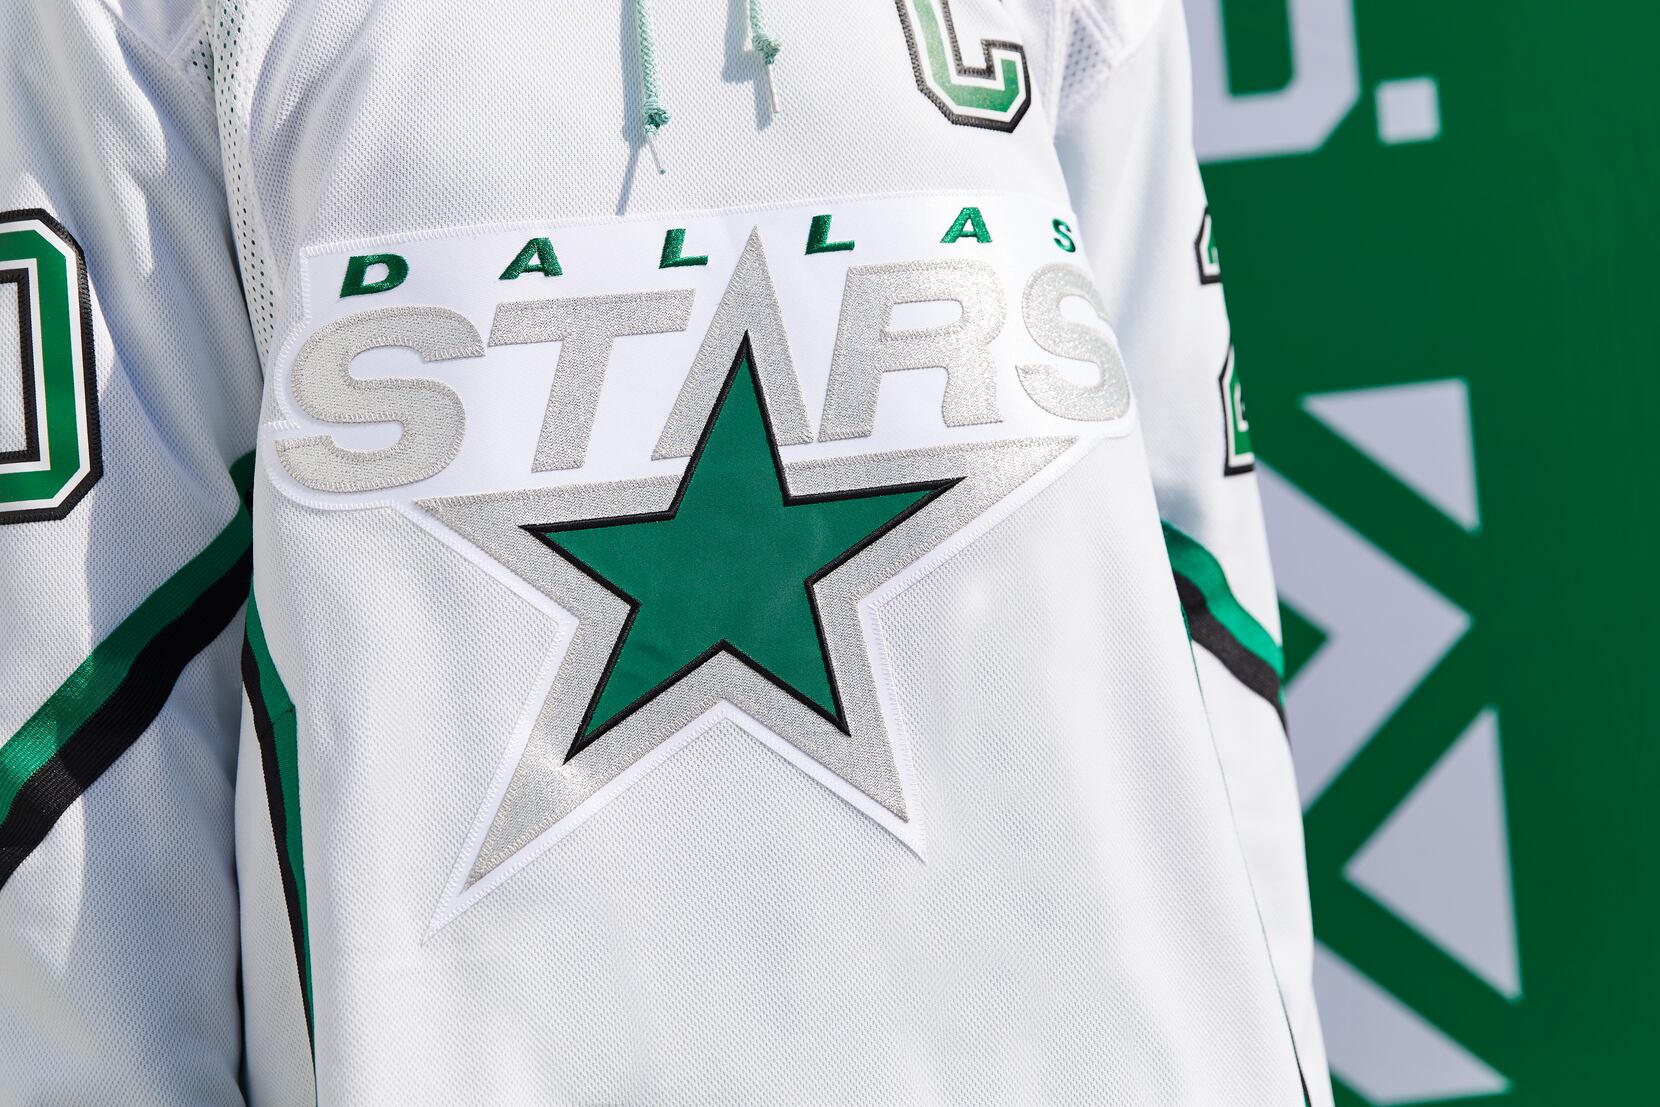 A Deeper Look into the Adidas Reverse Retro Jersey: Dallas Stars # DallasStars #ReverseRetro